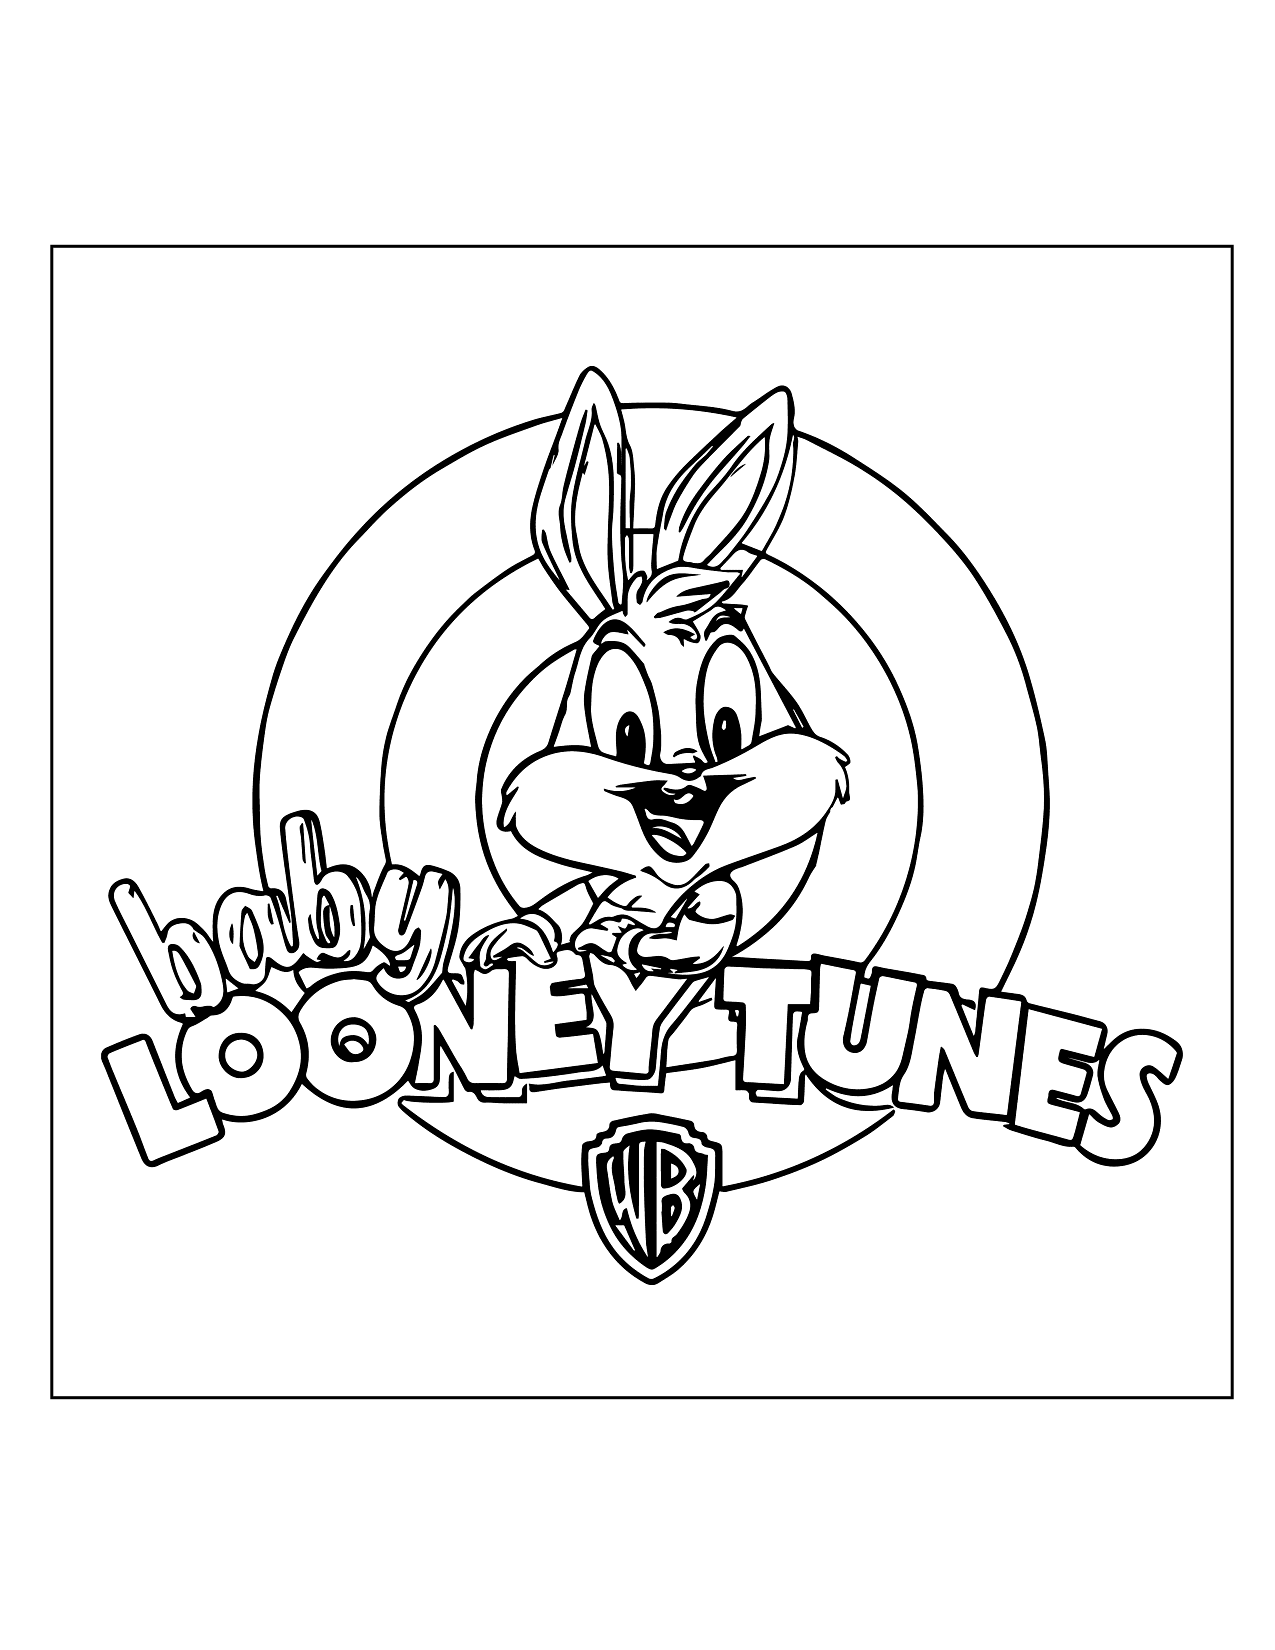 Baby Looney Tunes Logo Coloring Page